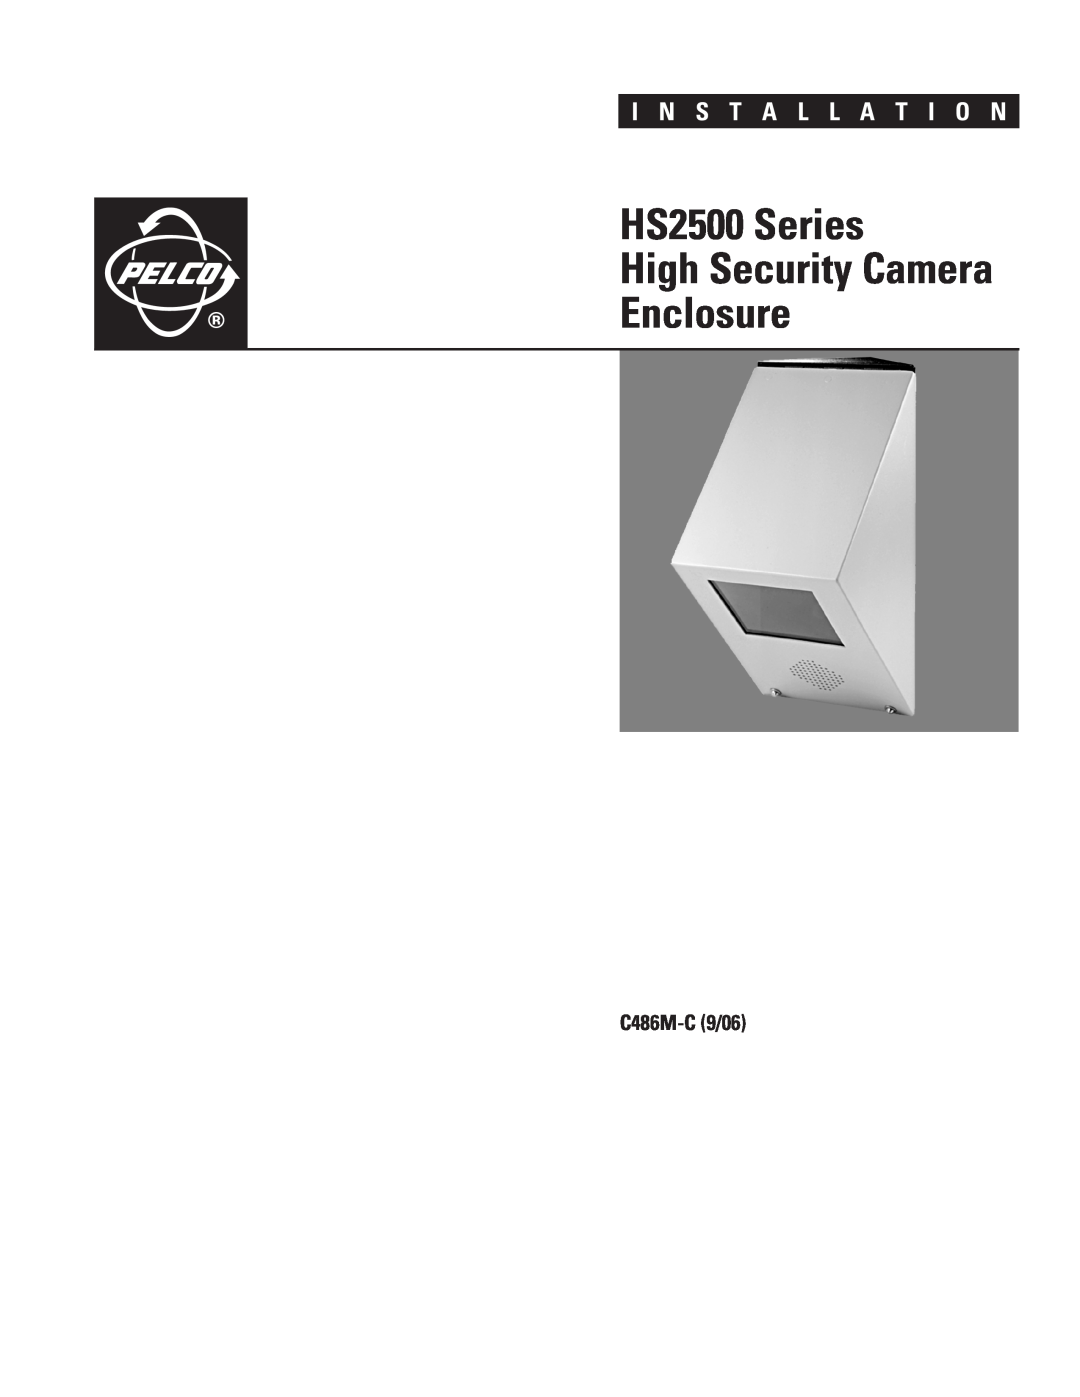 Pelco hs2500 manual HS2500 Series High Security Camera Enclosure, I N S T A L L A T I O N, C486M-C9/06 